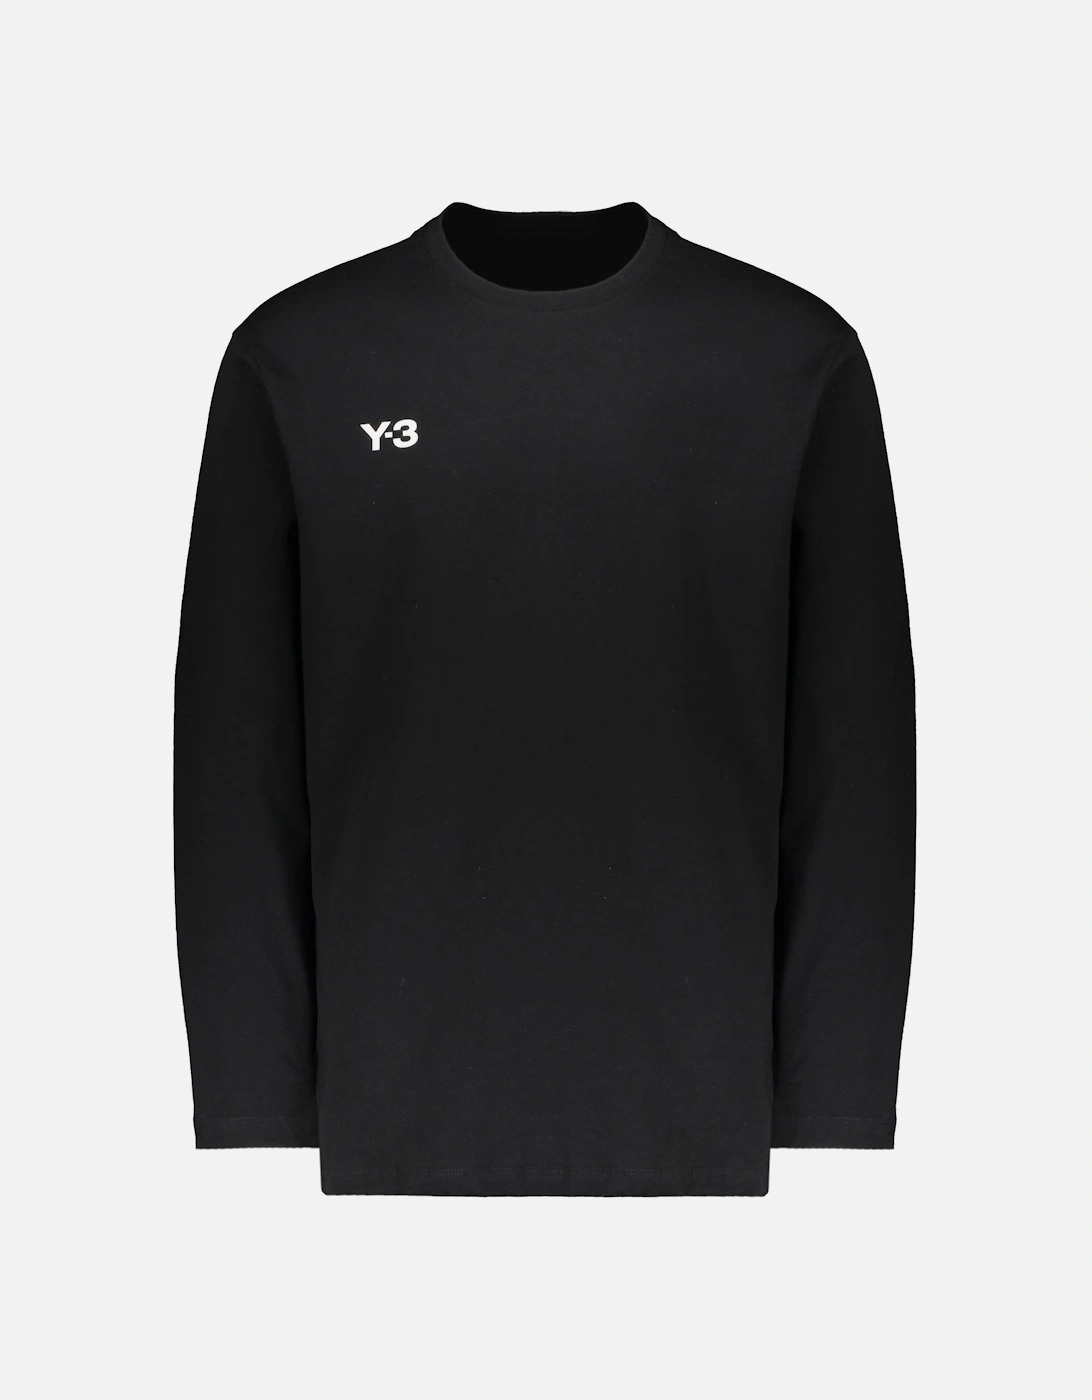 Y3 GFX Long Sleeve Tee - Black, 4 of 3